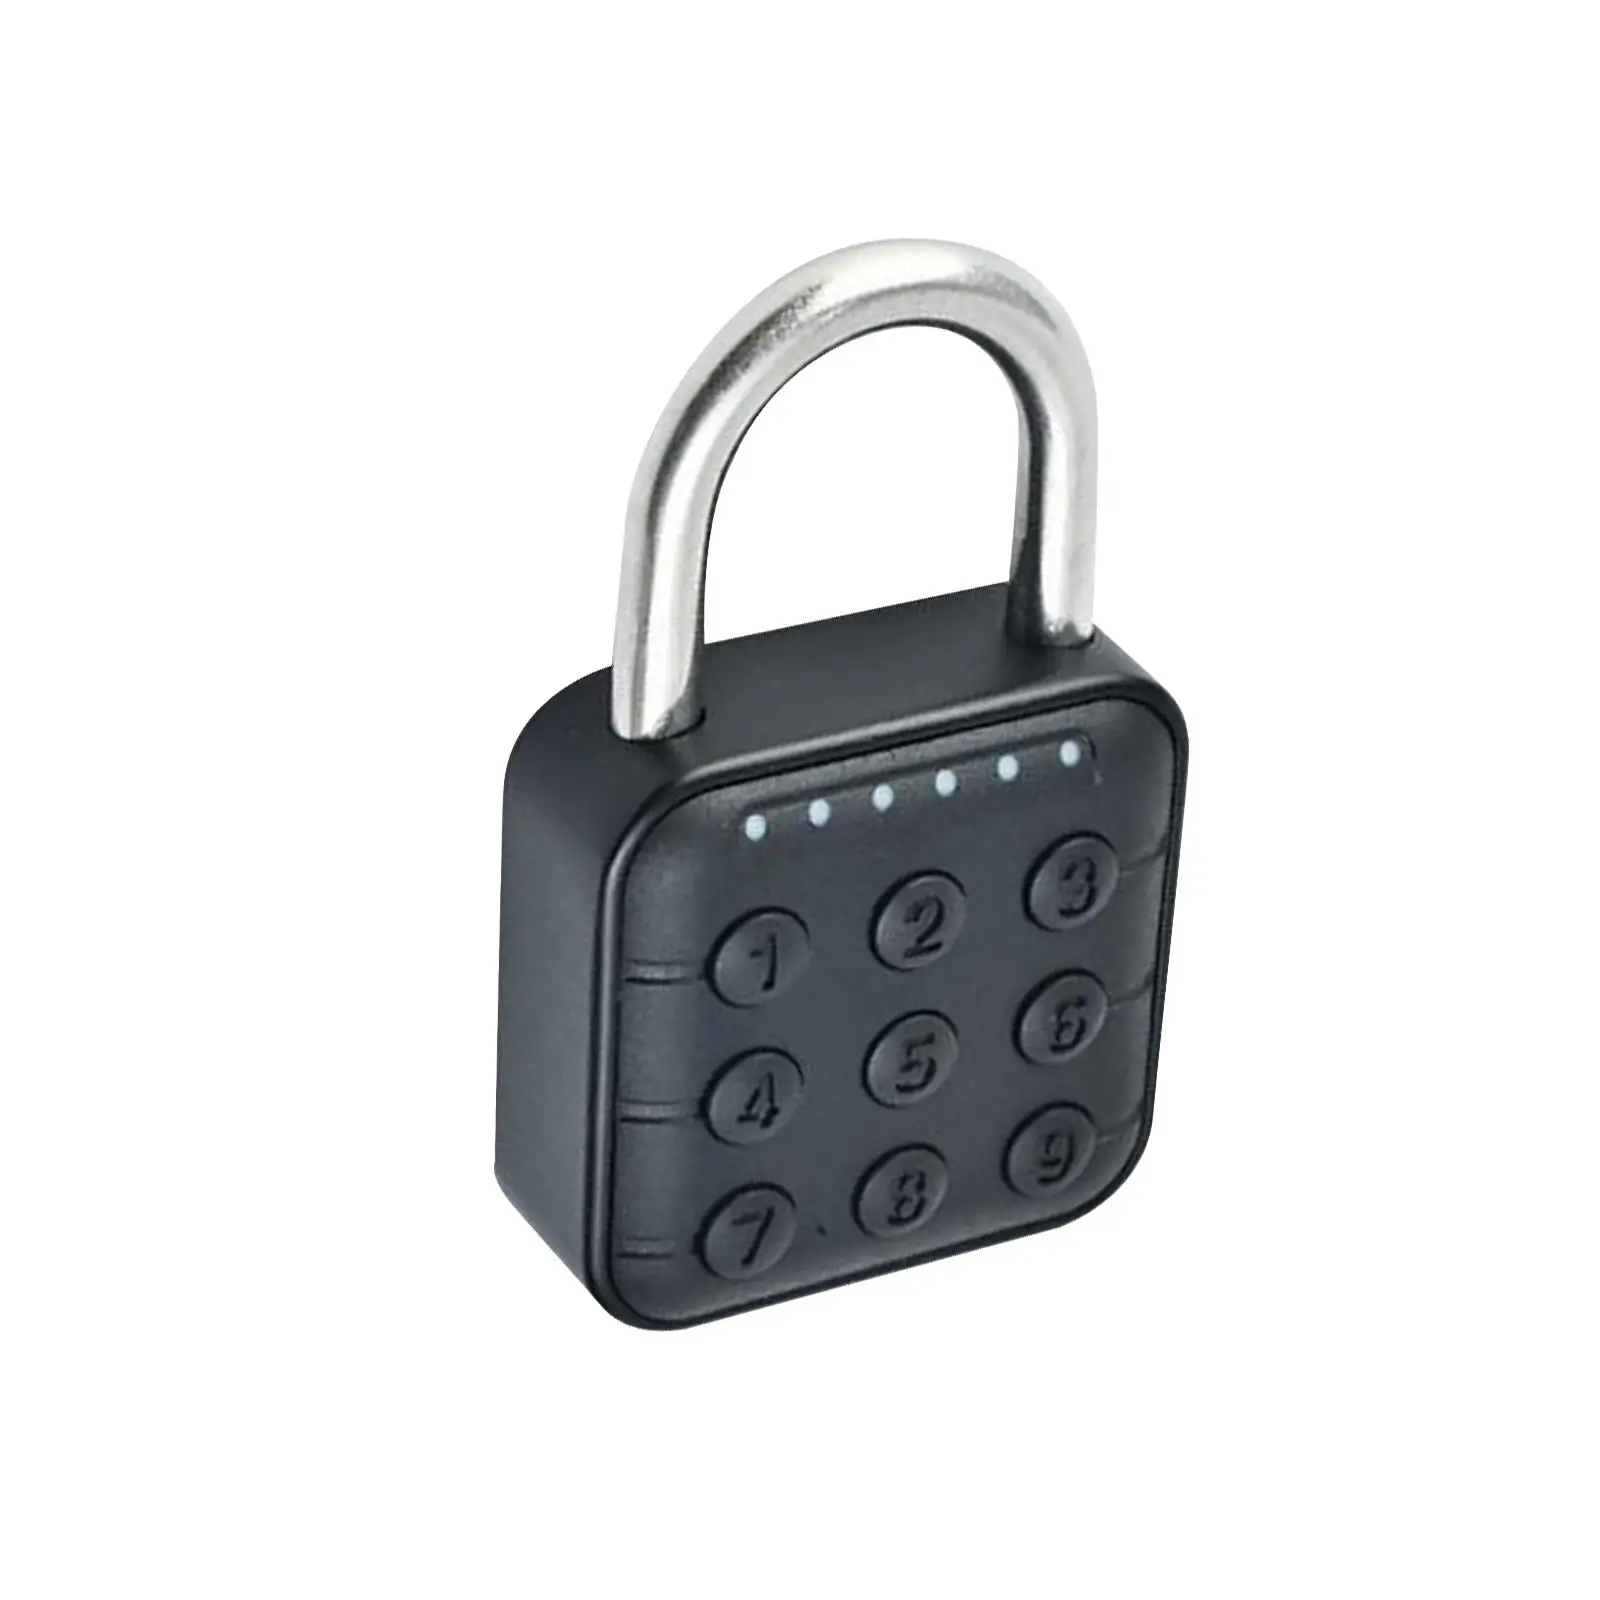 

Combination Lock Portable Locker Lock Small Locks Suitcases Padlock Luggage Password Lock for Case Gym Luggage Fence Suitcase